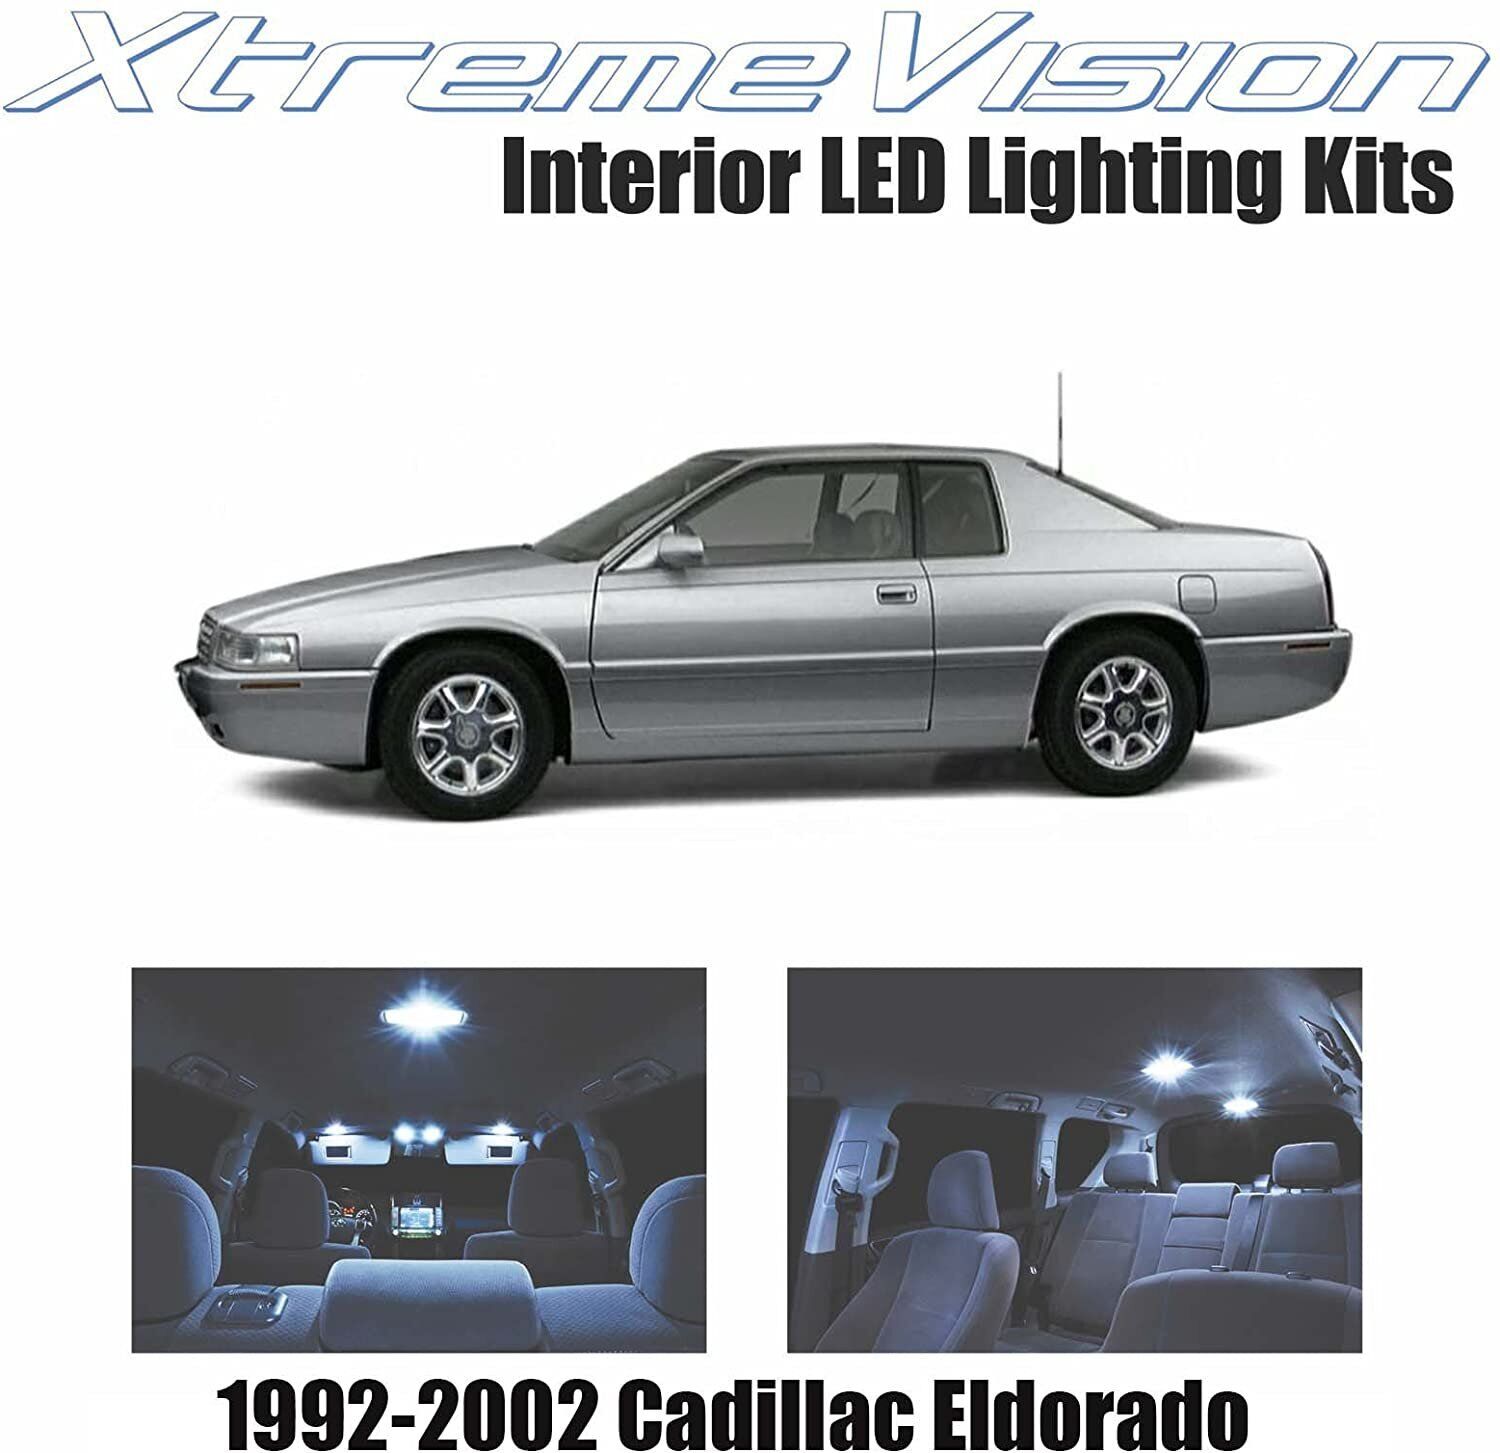 Xtremevision Interior LED for Cadillac Eldorado 1992-2002 (8 Pieces) Cool...